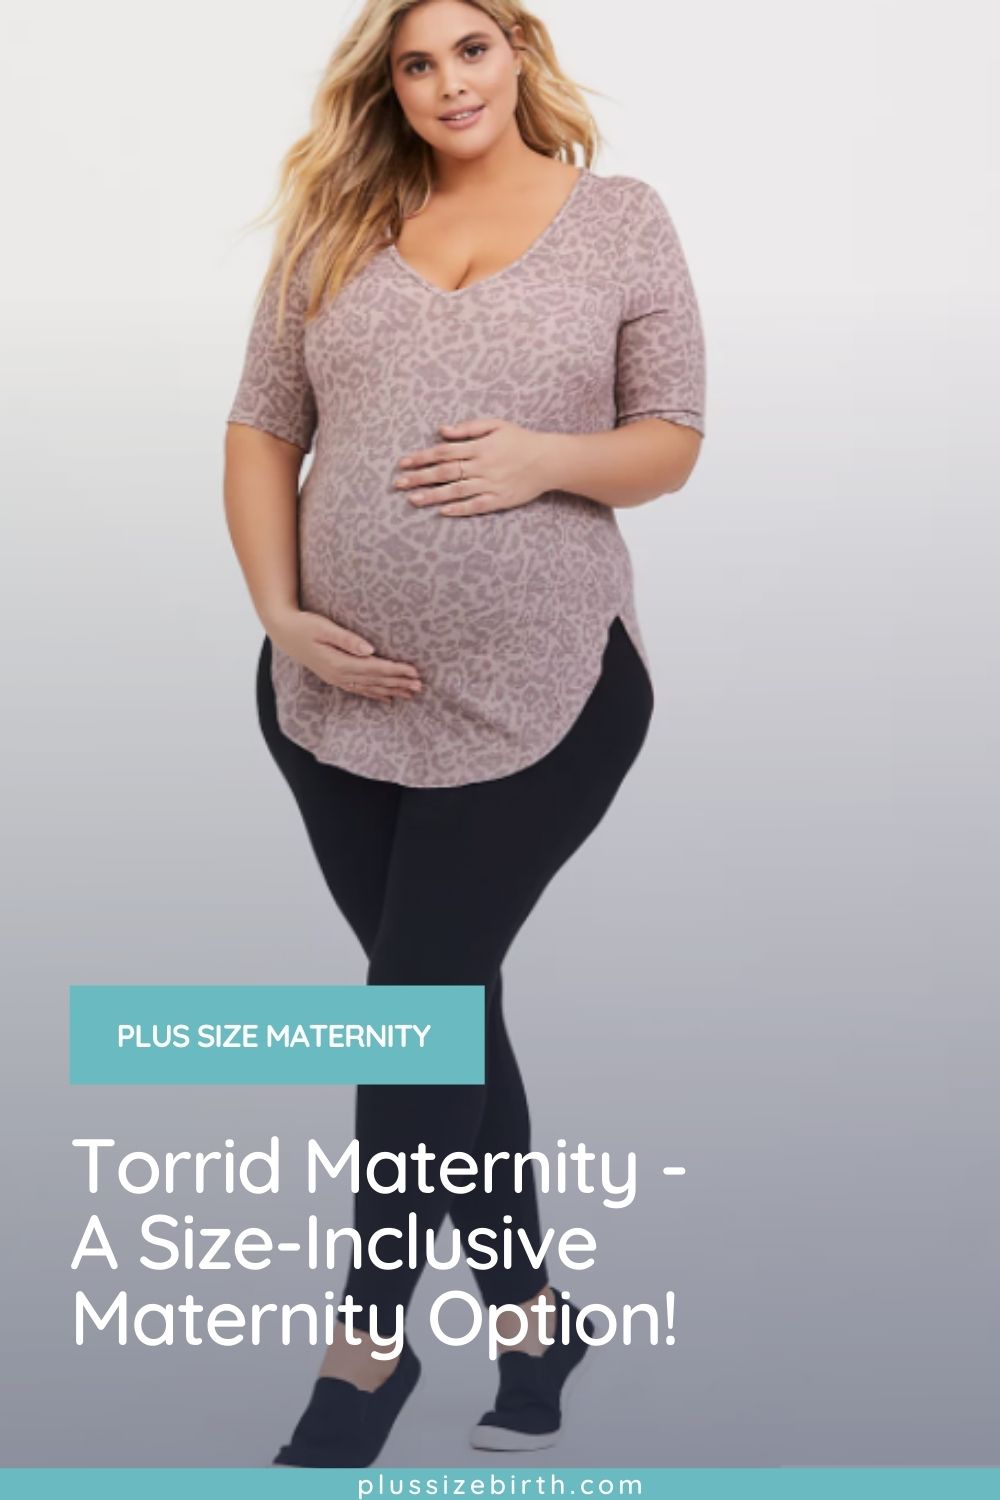 https://plussizebirth.com/wp-content/uploads/2021/11/Torrid-Maternity.jpg